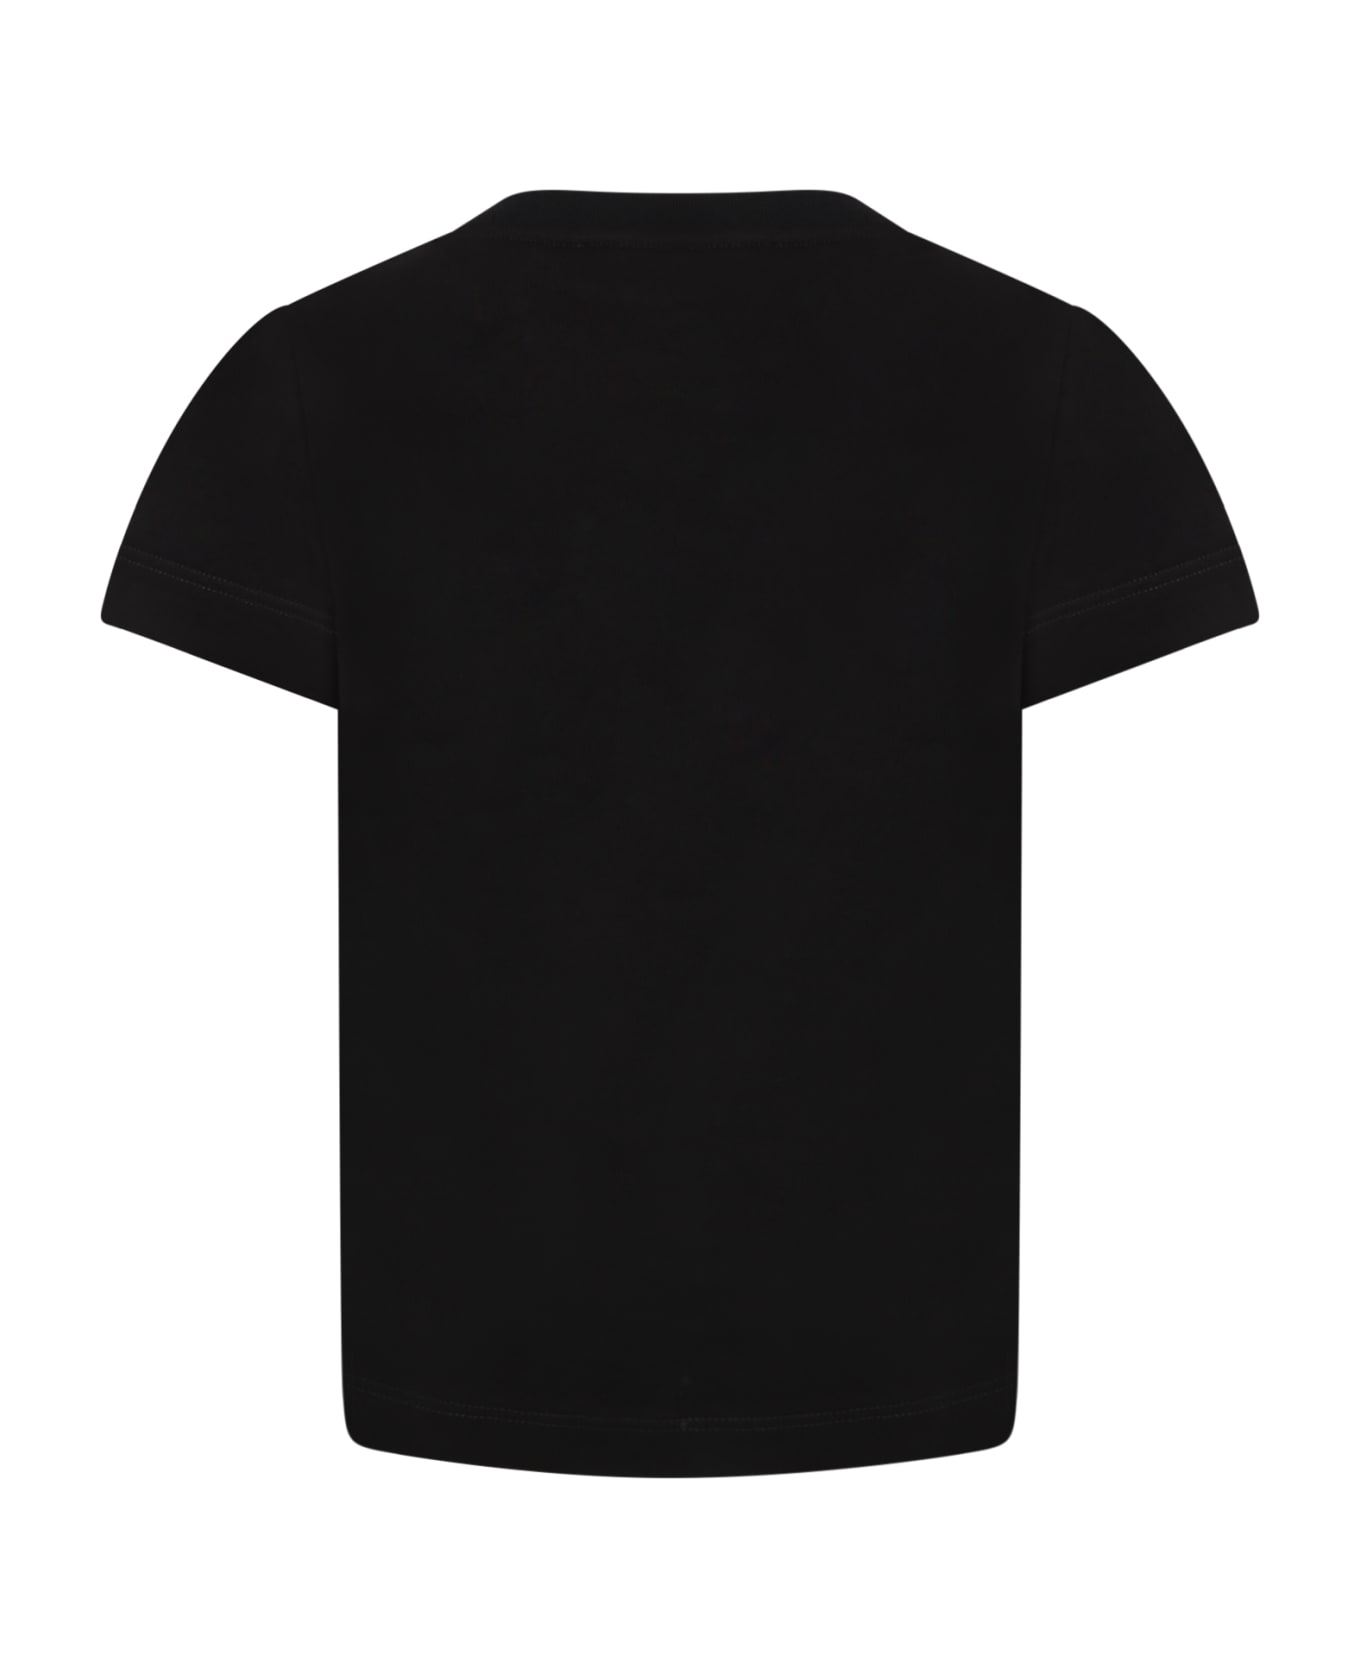 Balmain Black T-shirt Forr Kids With Studded Logo - Black